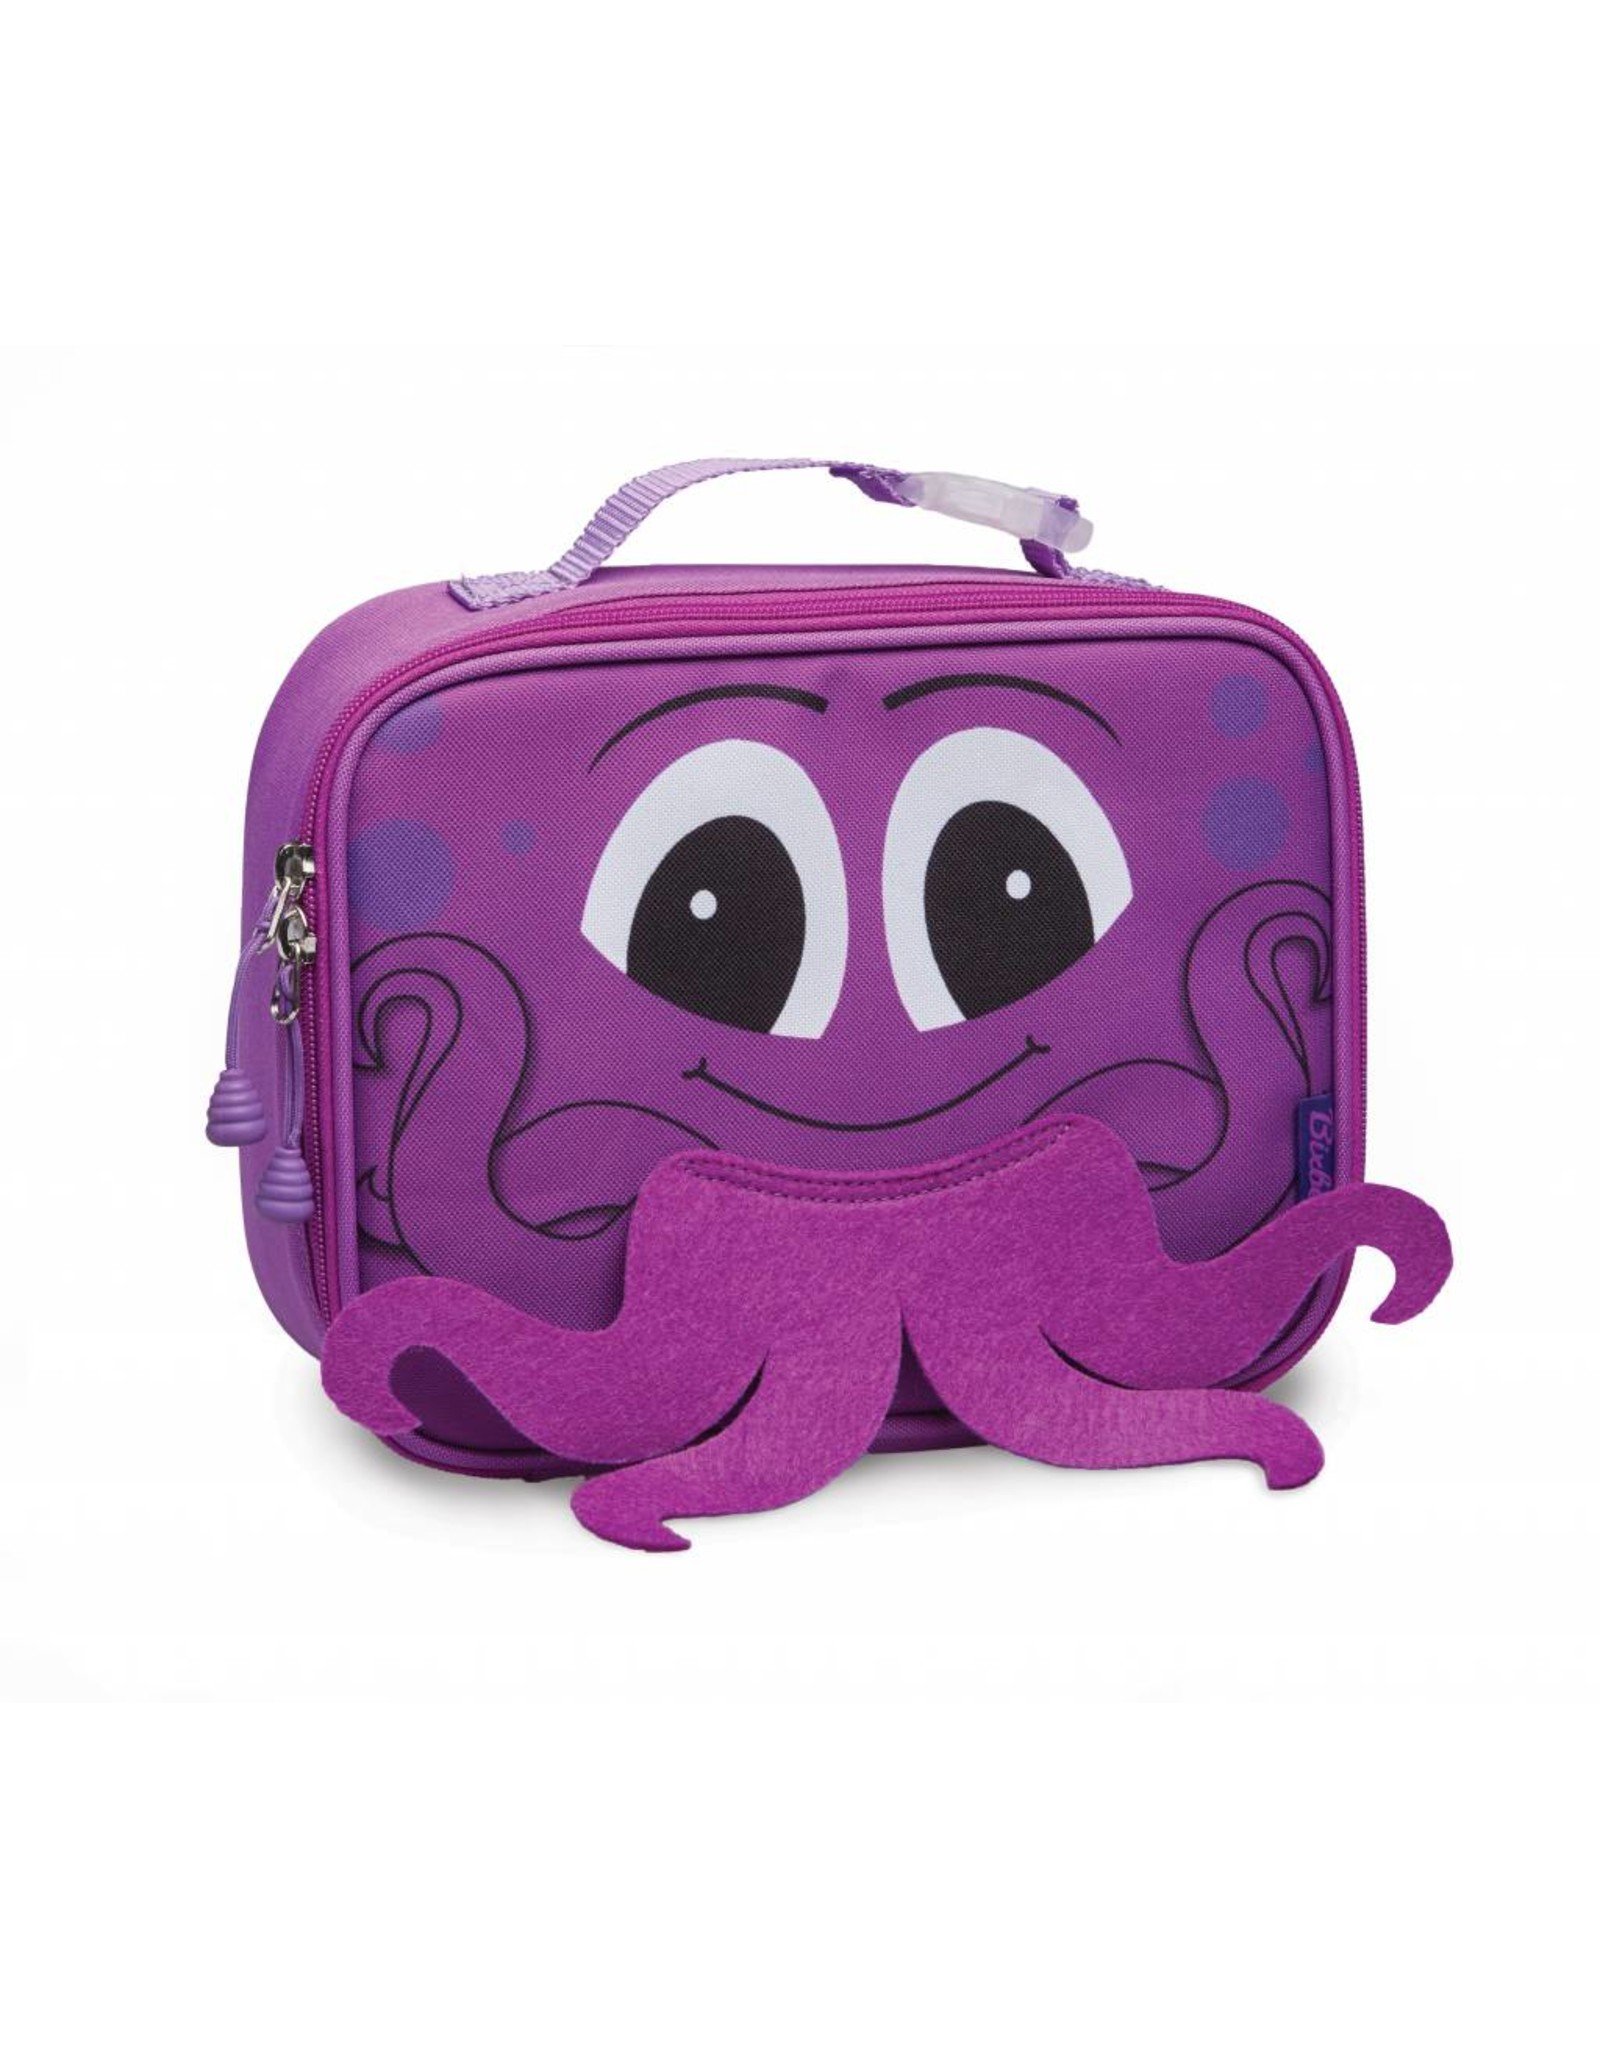 Bixbee Lunch Box  Octopus